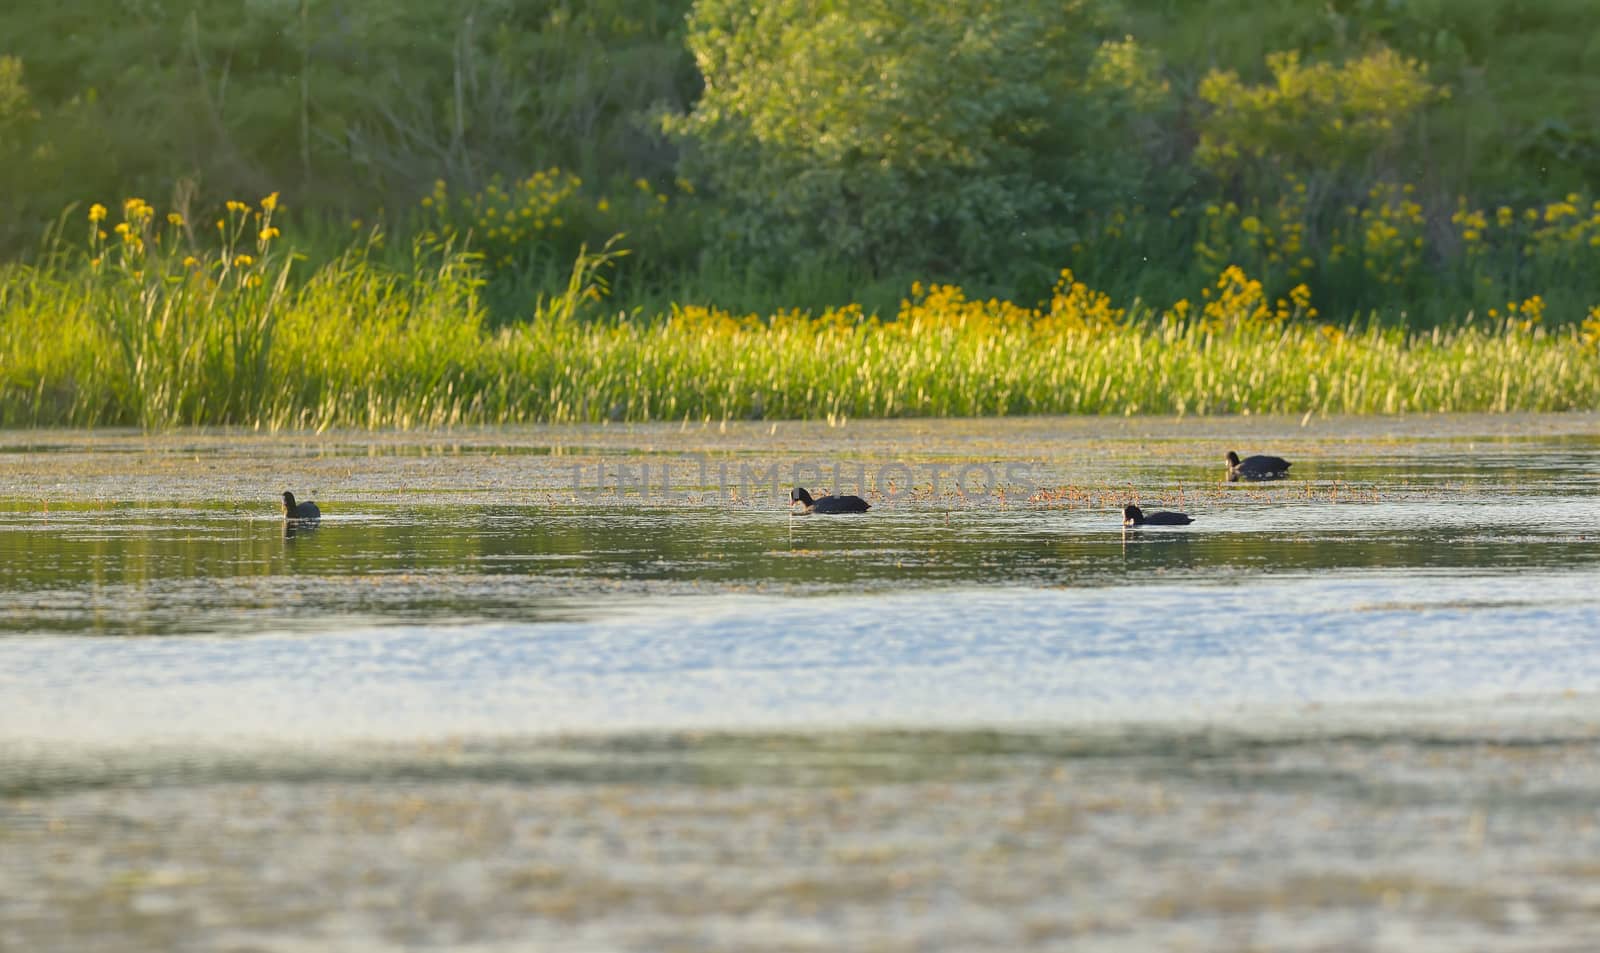 Wild ducks on lake by jordachelr